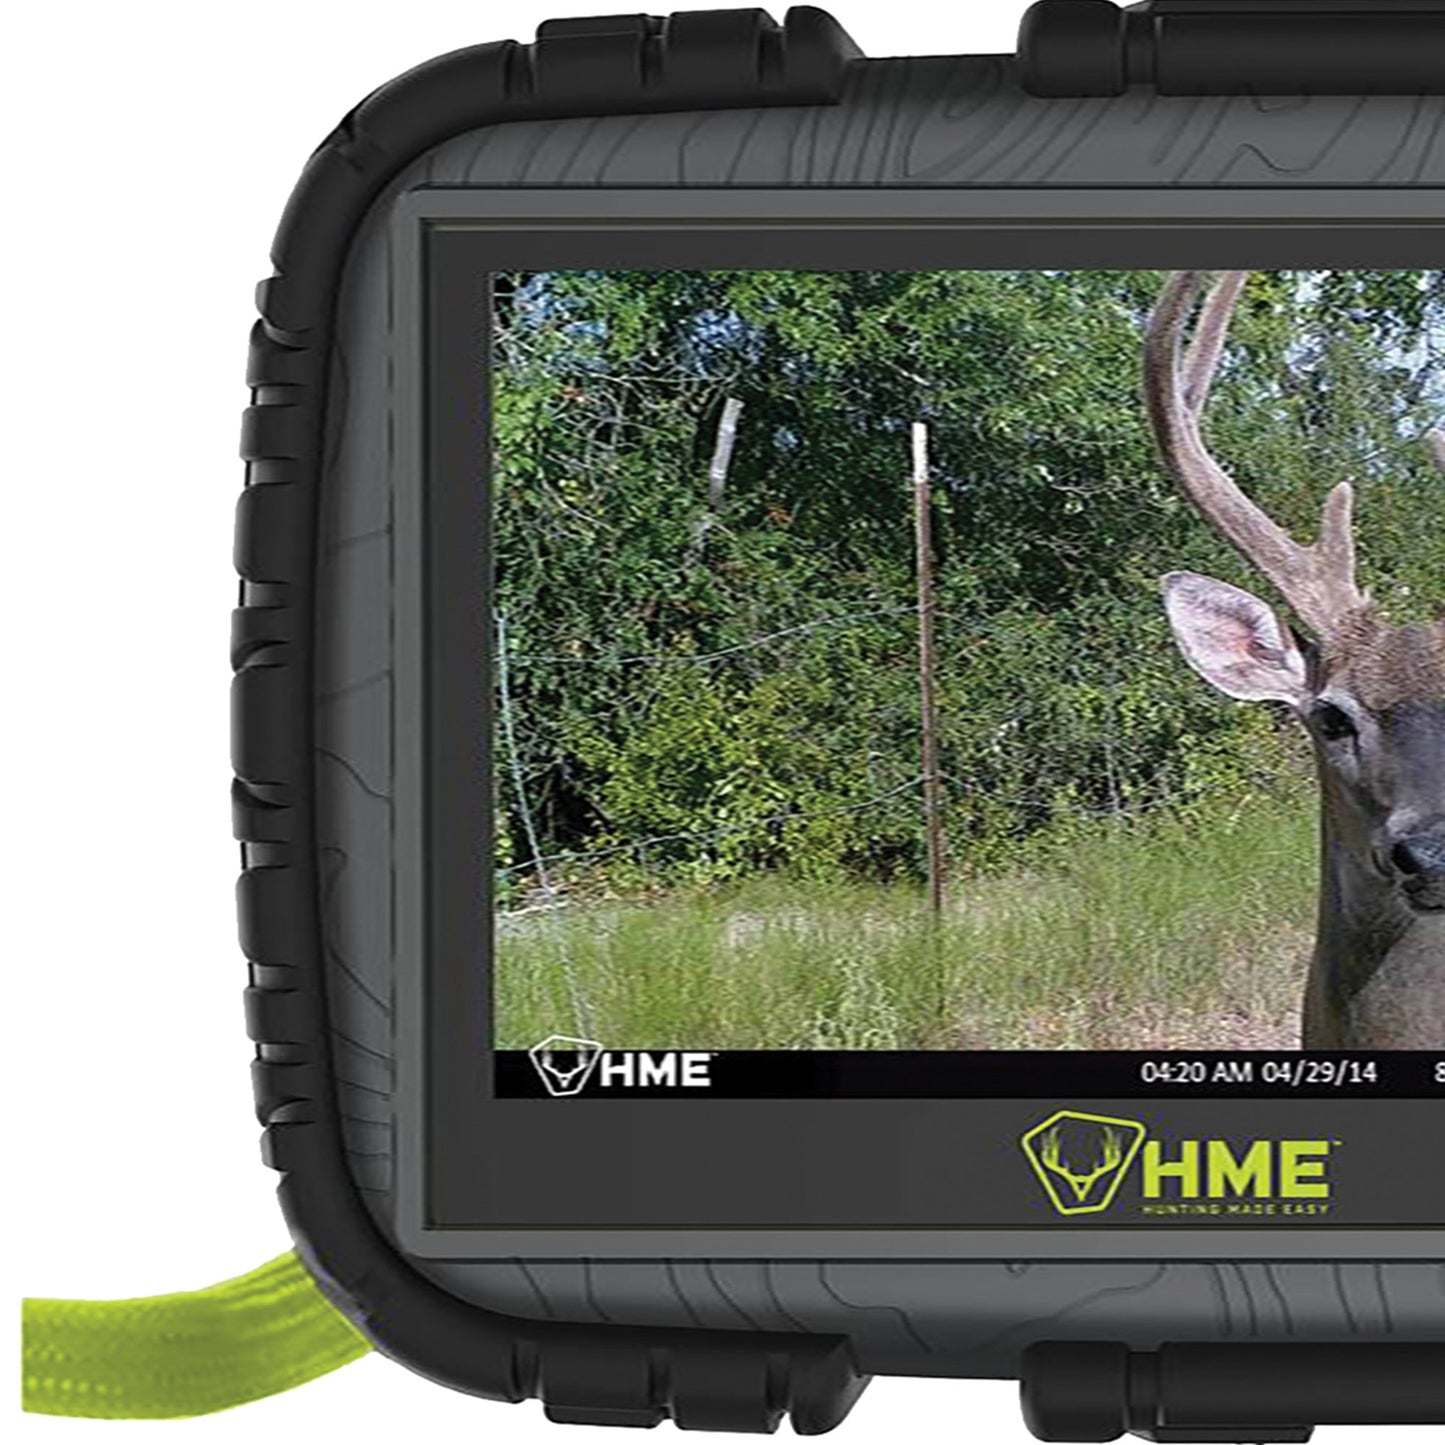 Hme HME-CRV43HD 1080p HD SD Card Reader/Viewer with 4.3-Inch LCD Screen